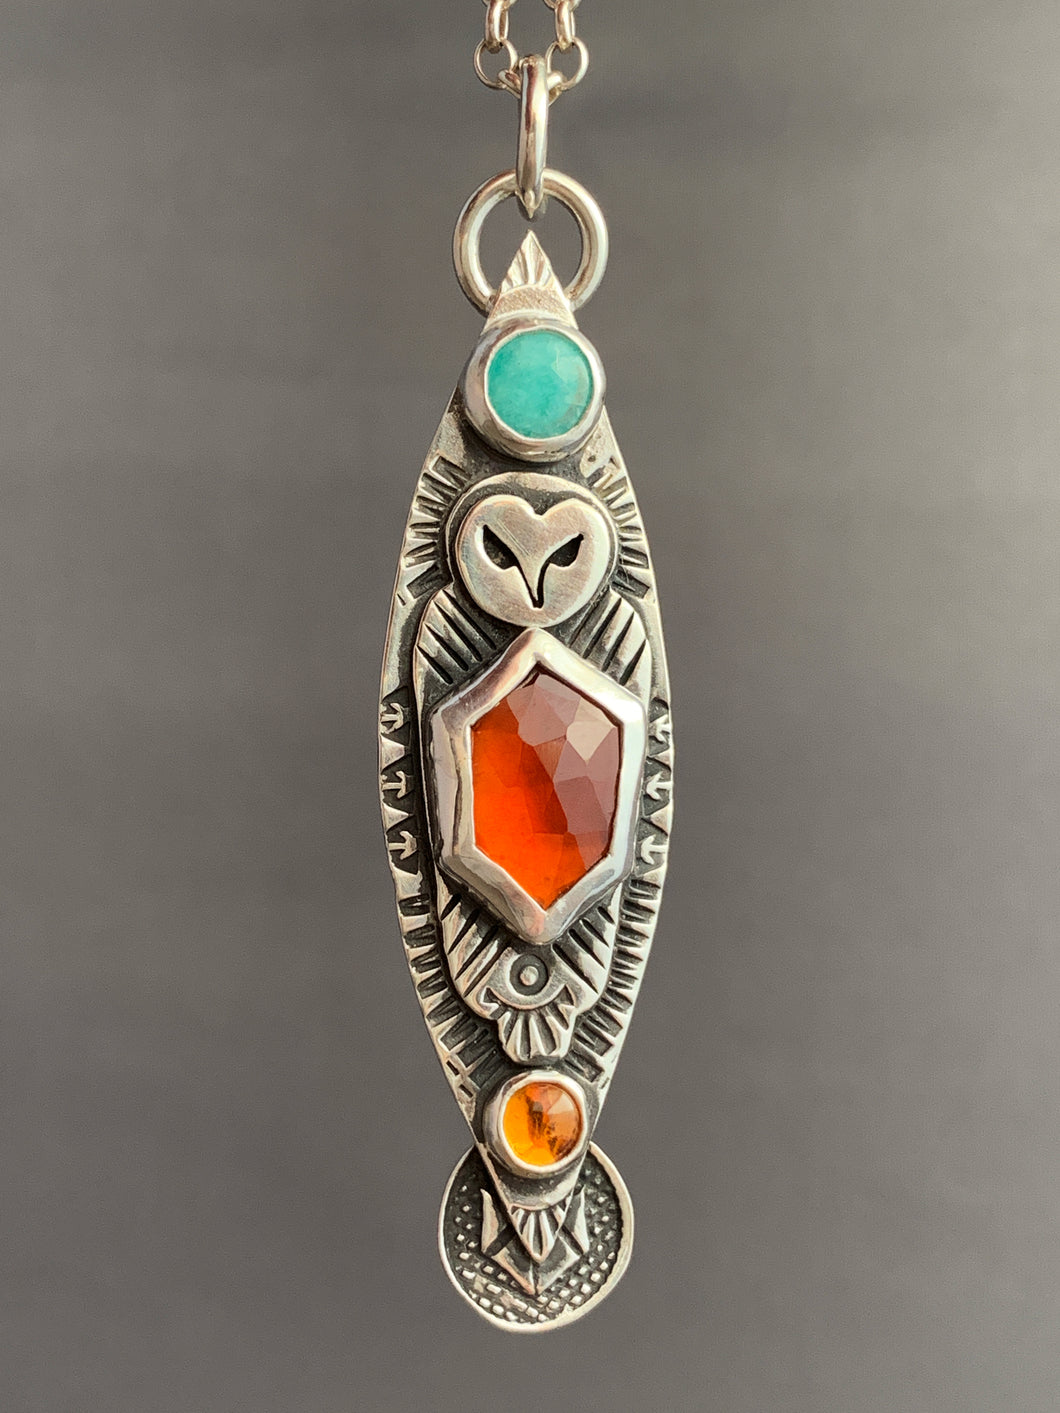 Owl pendant #5 Amazonite, Hessonite Garnet, and Citrine